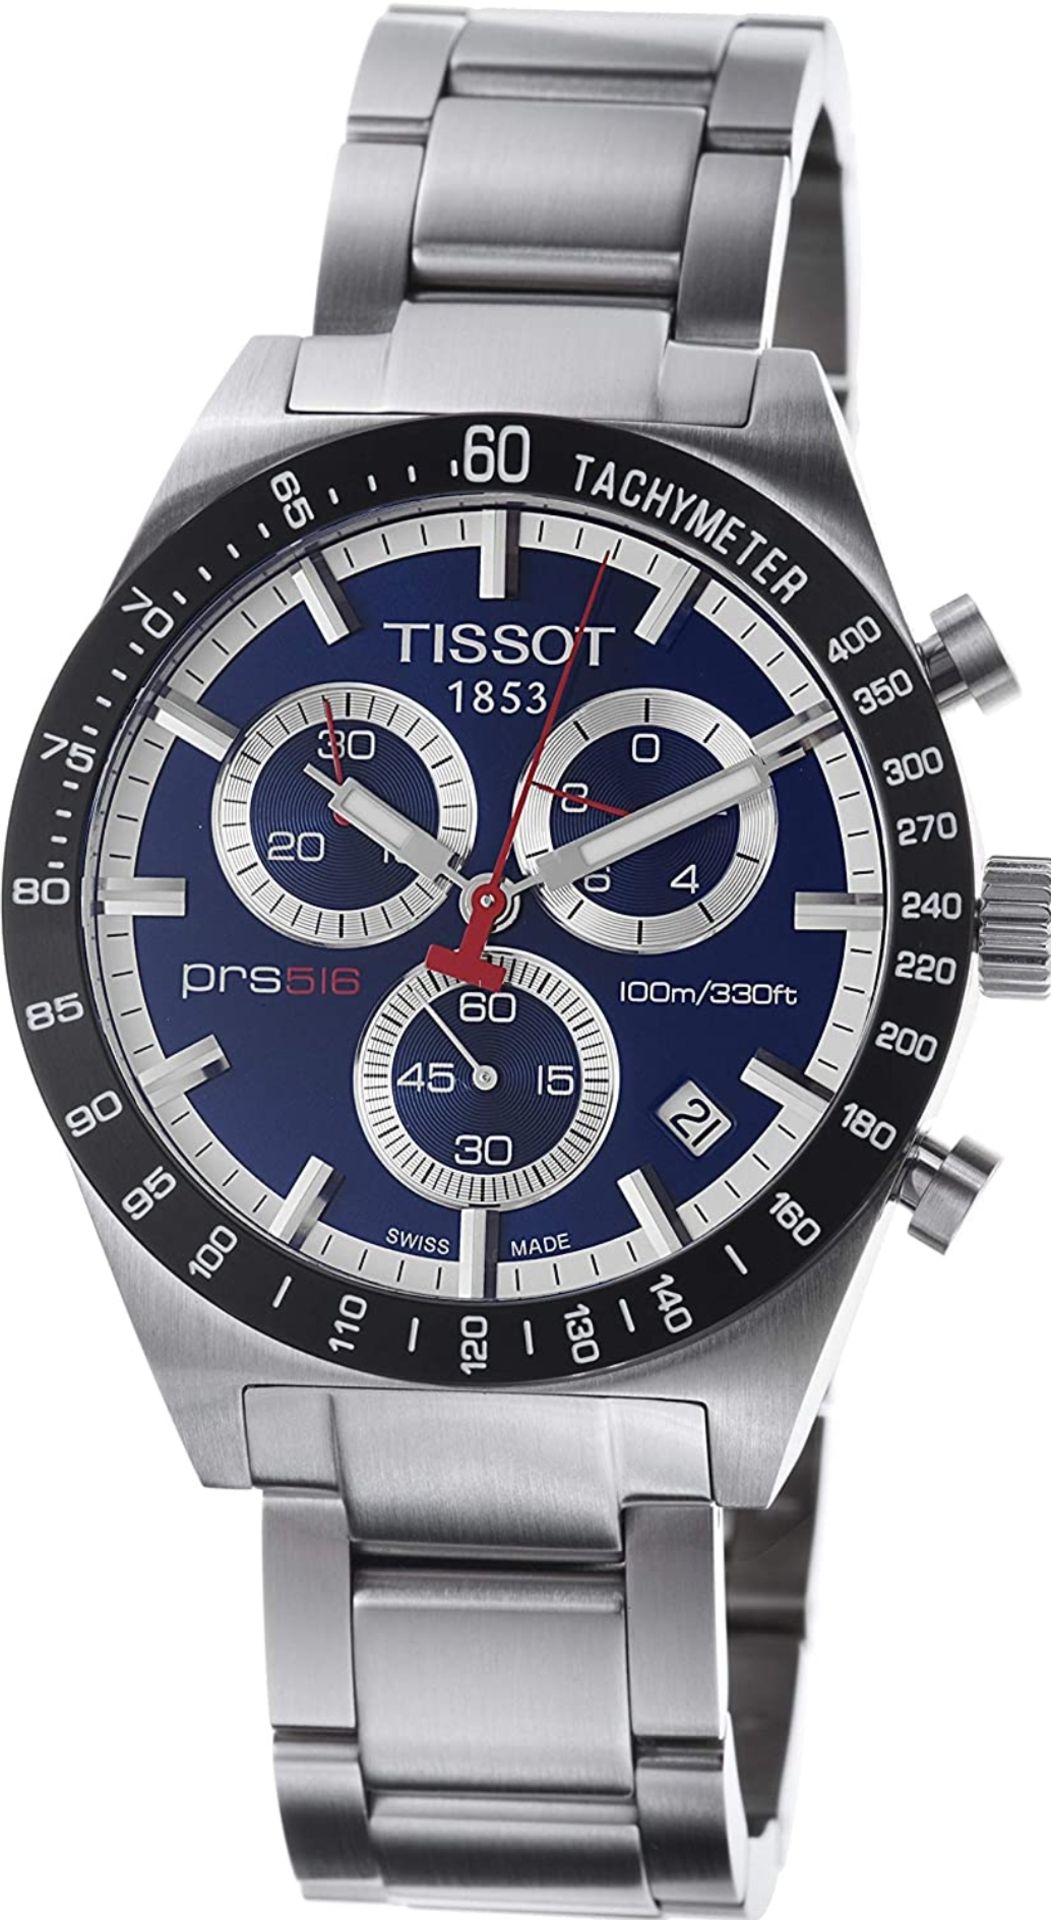 Tissot T044.417.21.041.00 Men's Chronograph Watch - Image 4 of 6